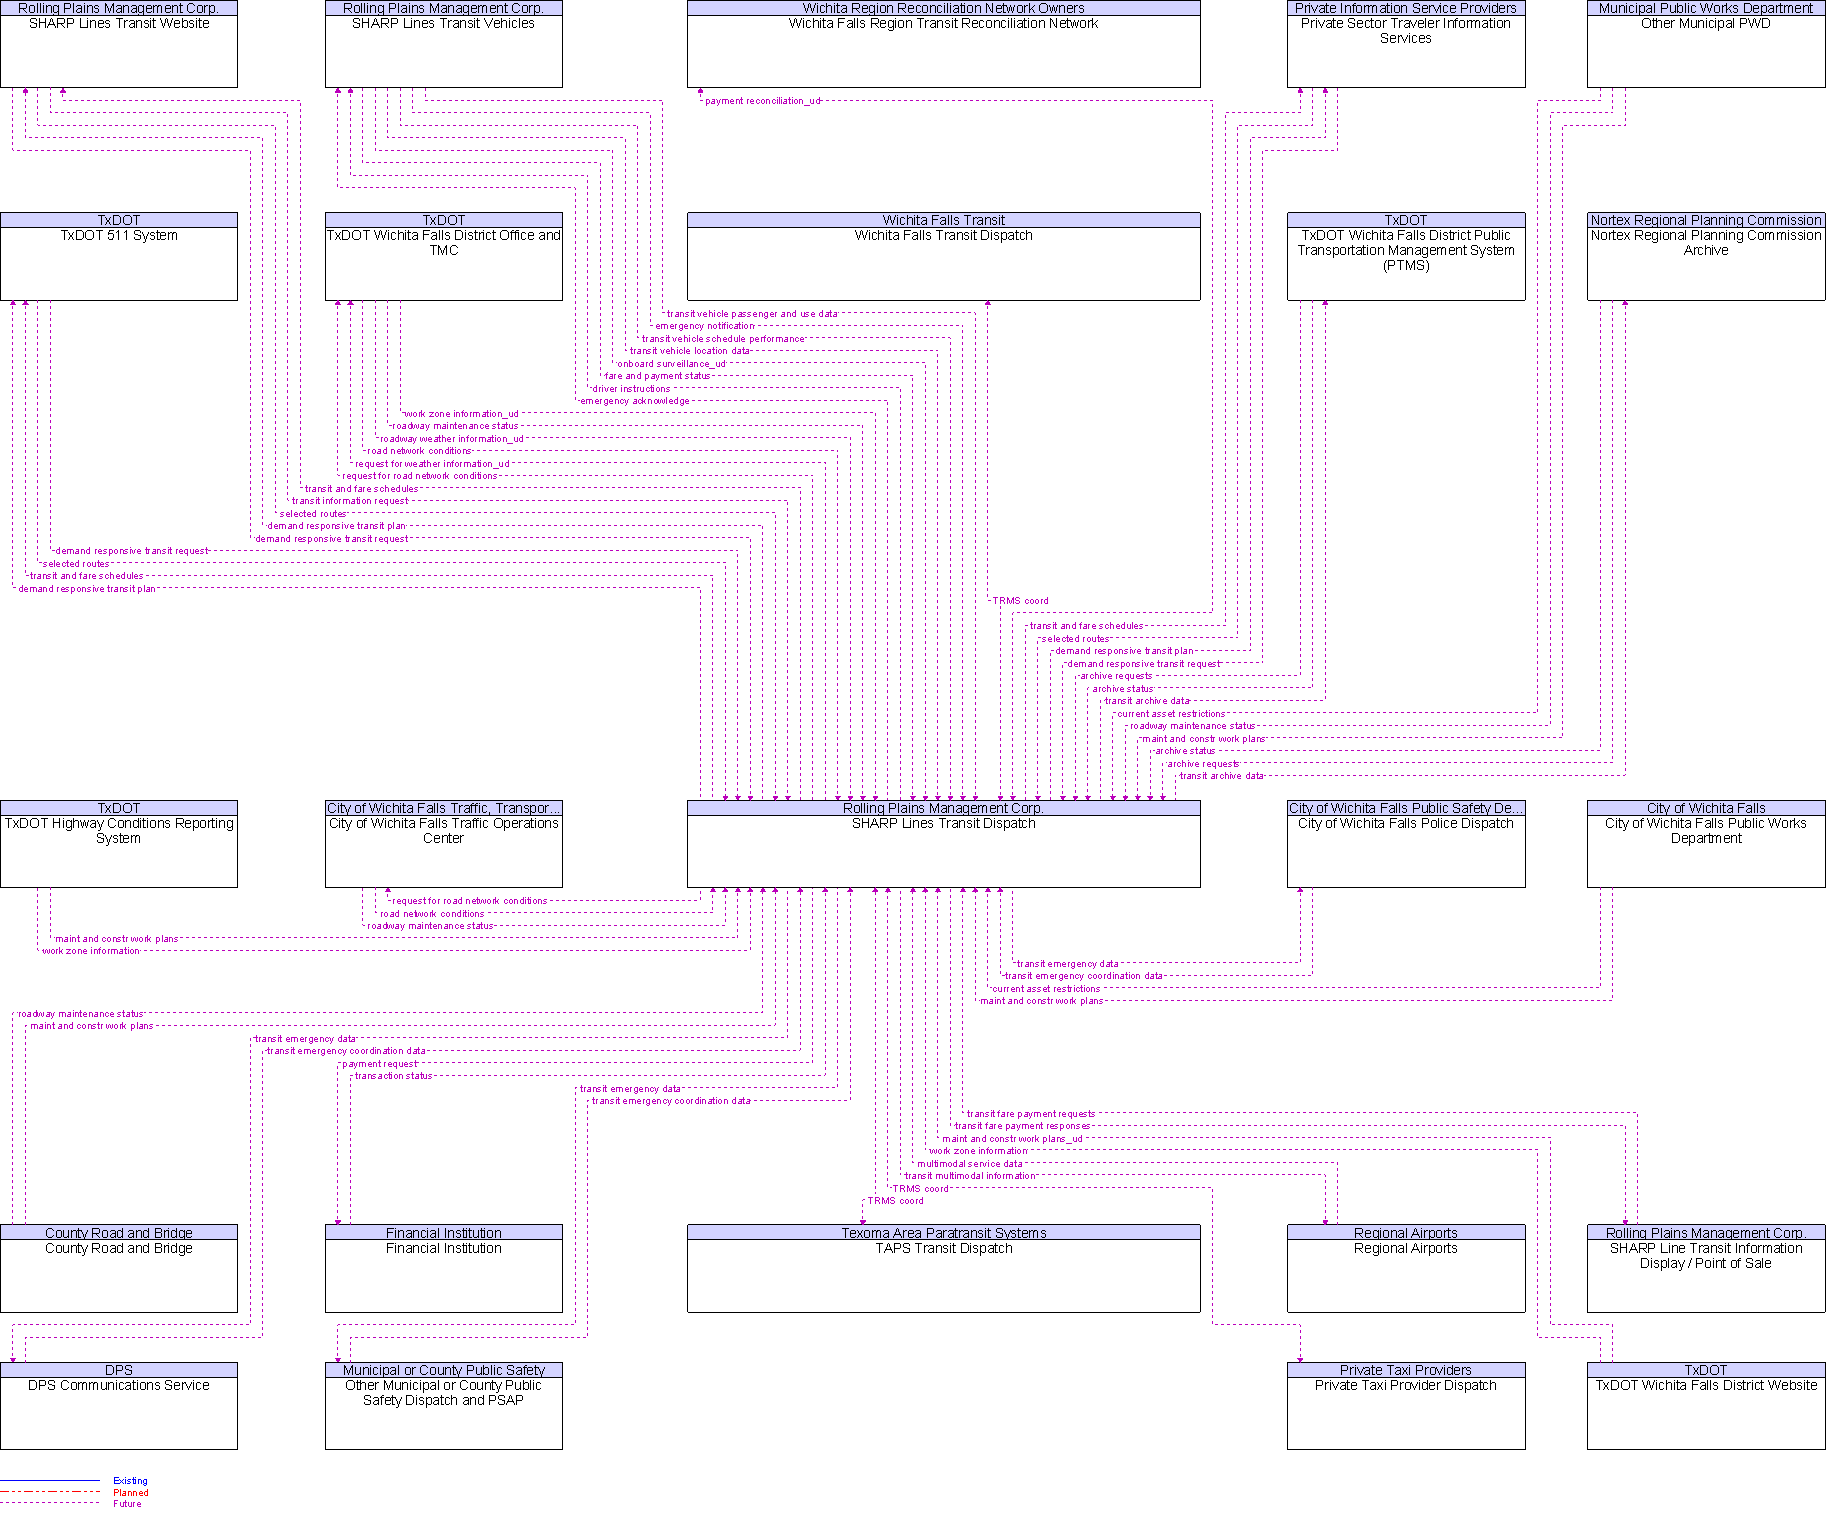 Context Diagram for SHARP Lines Transit Dispatch